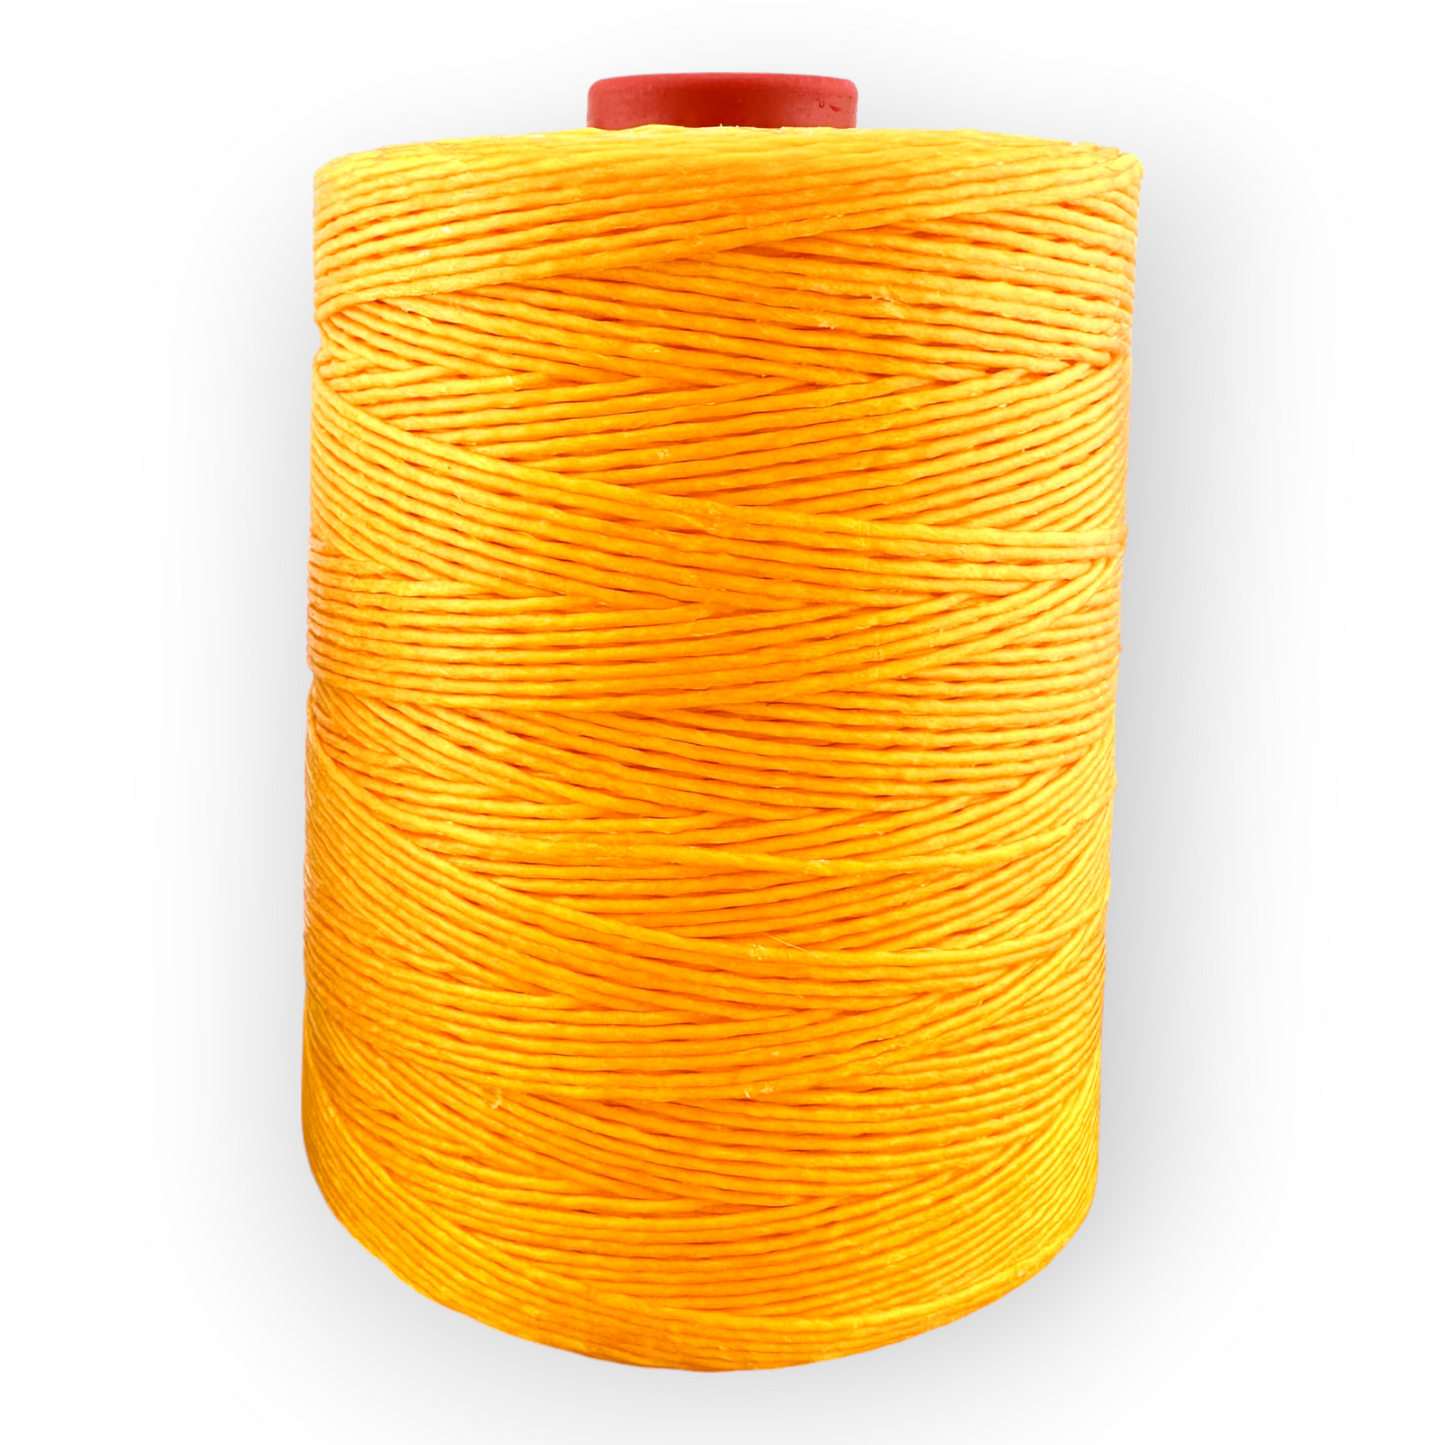 600 Meter Macrame Cord Spool - Yellow